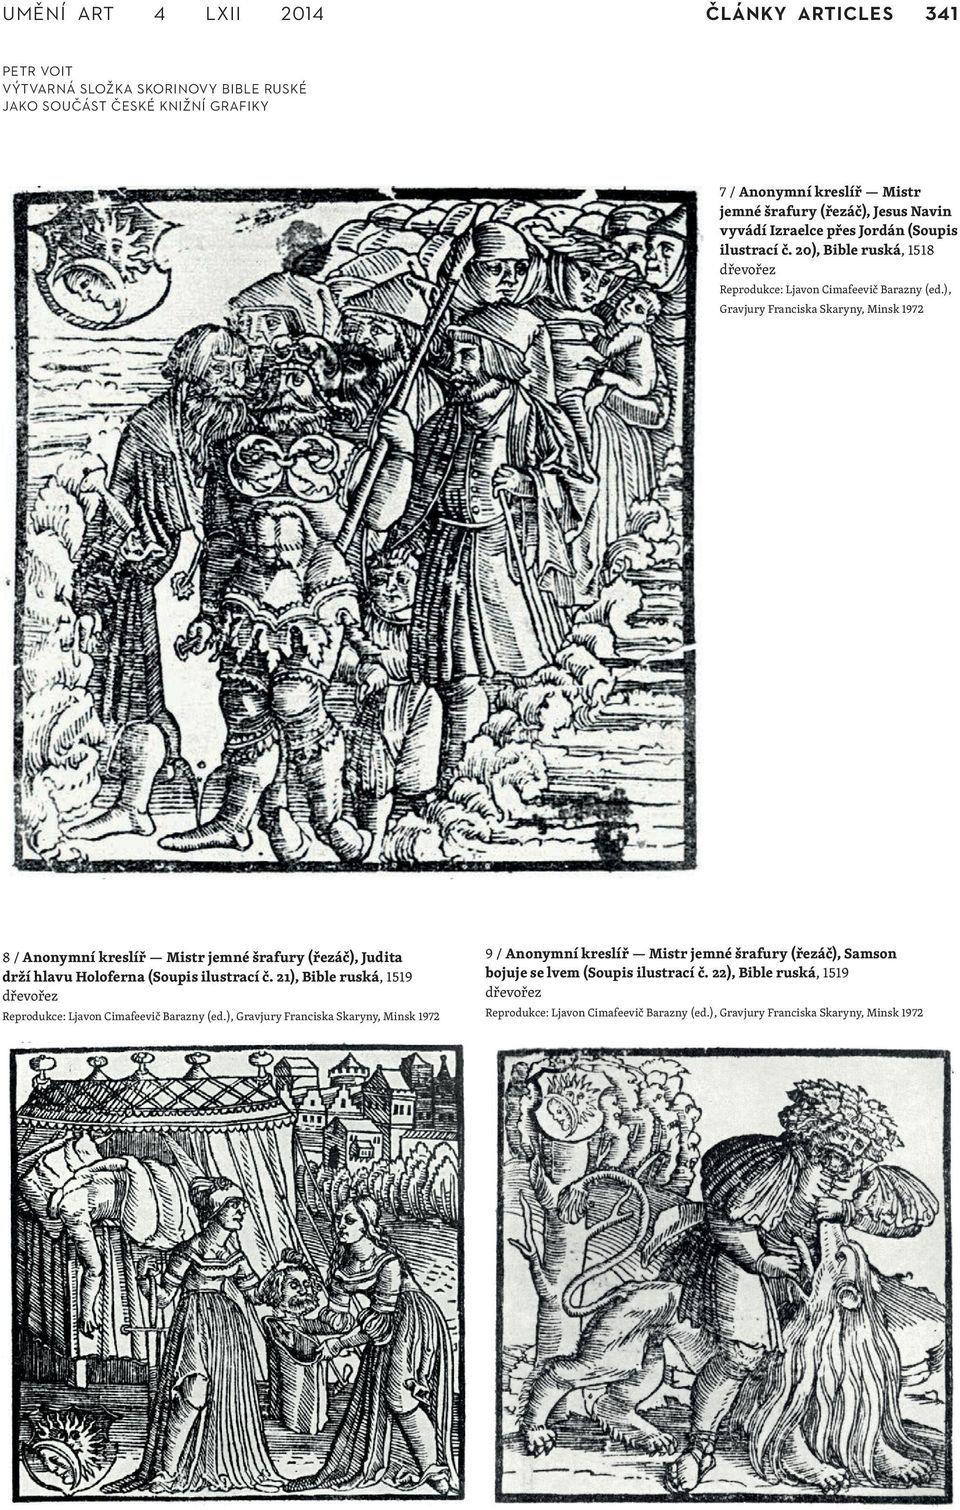 20), Bible ruská, 1518 Reprodukce: Ljavon Cimafeevič Barazny (ed.